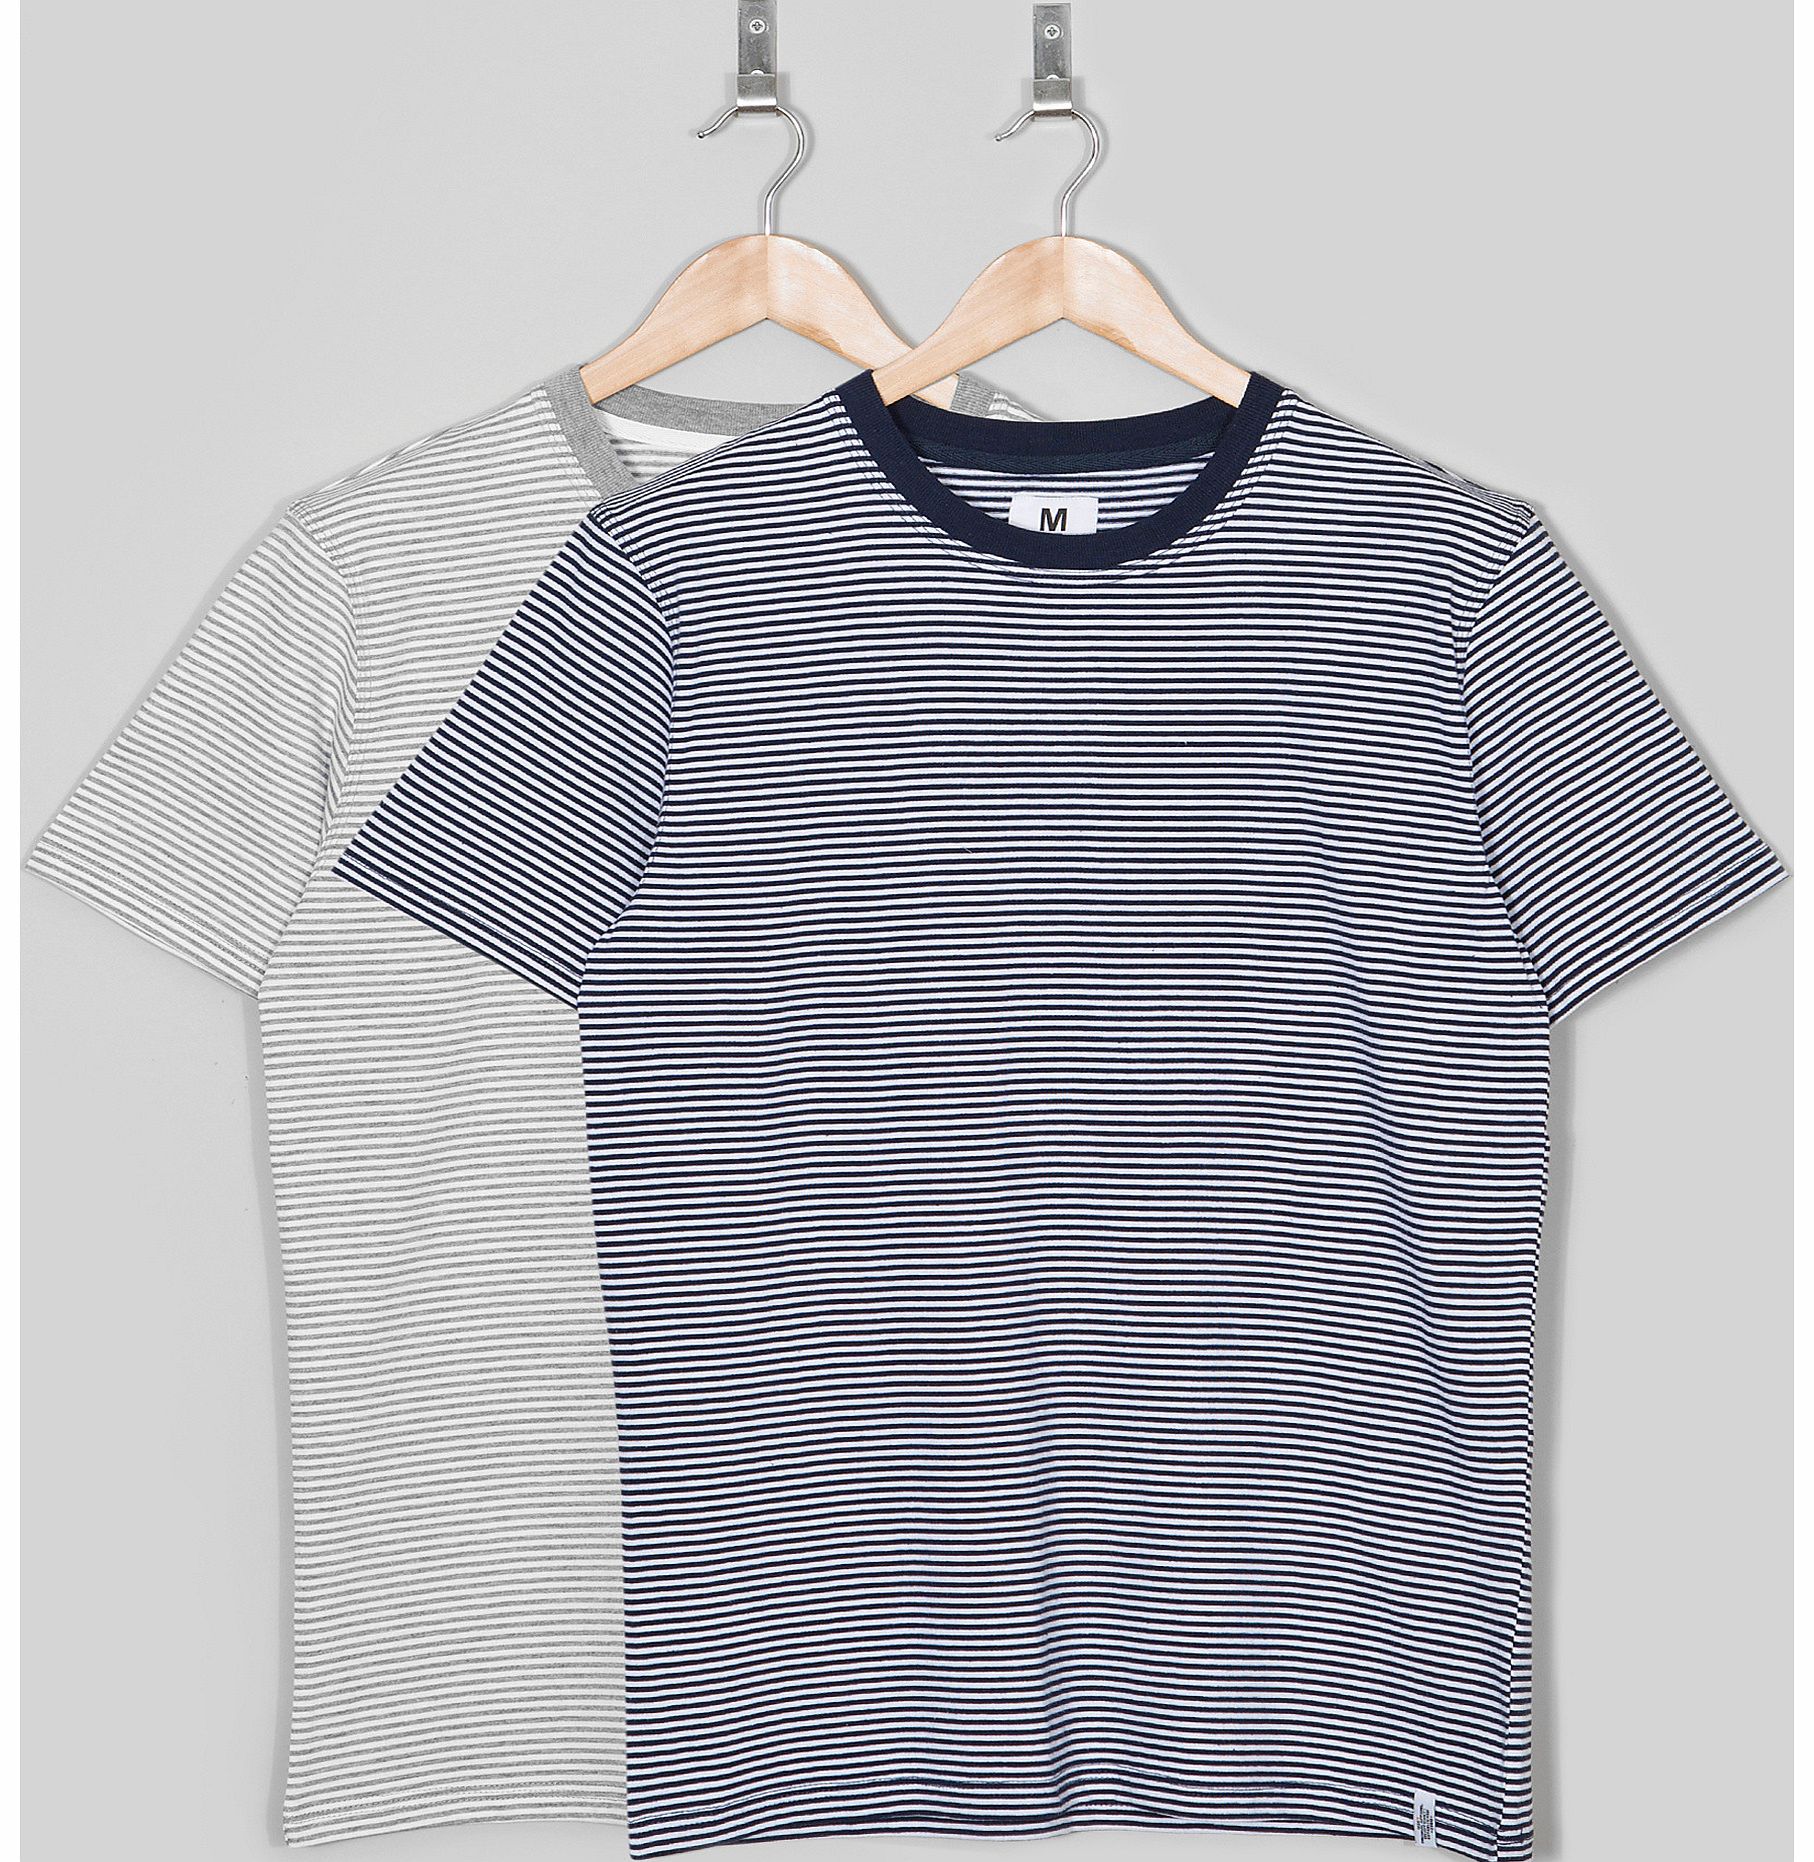 Basics Striped T-Shirt 2 Pack